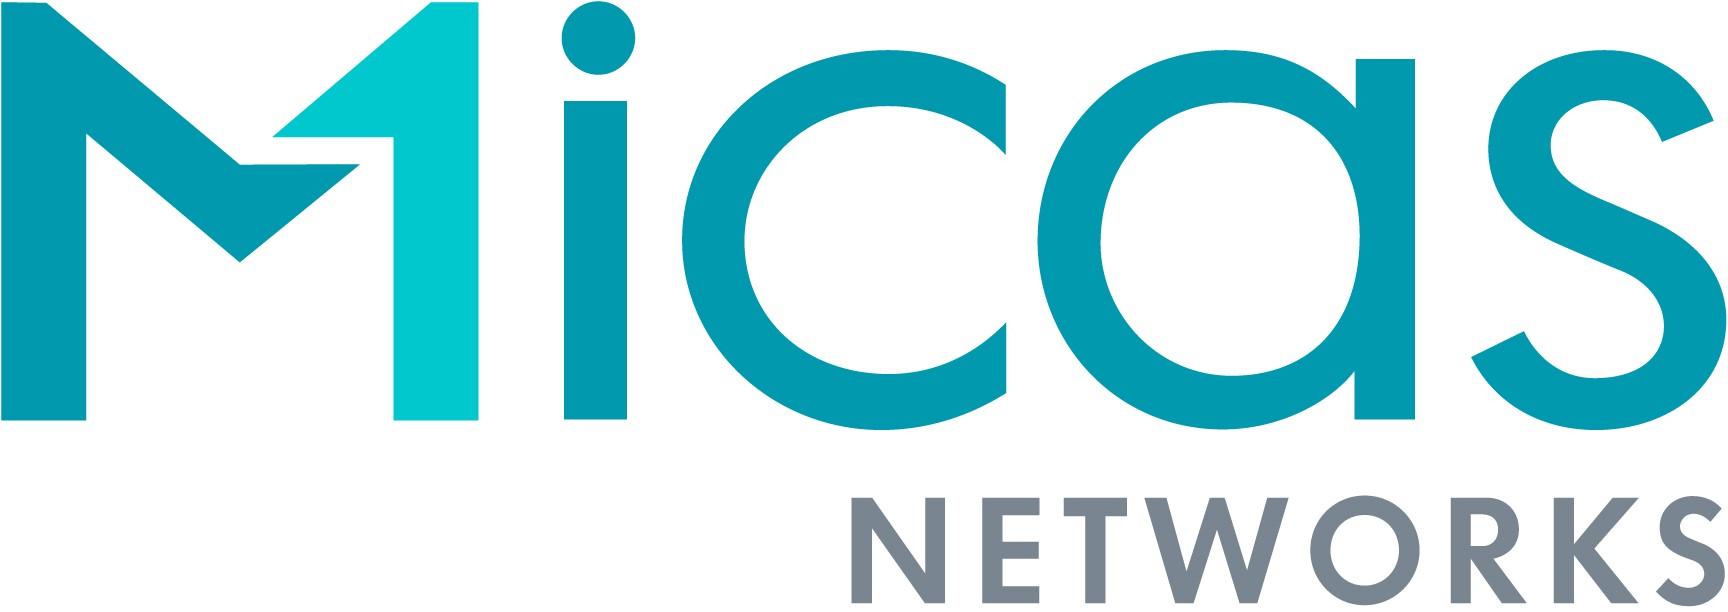 Micas Networks logo.jpg